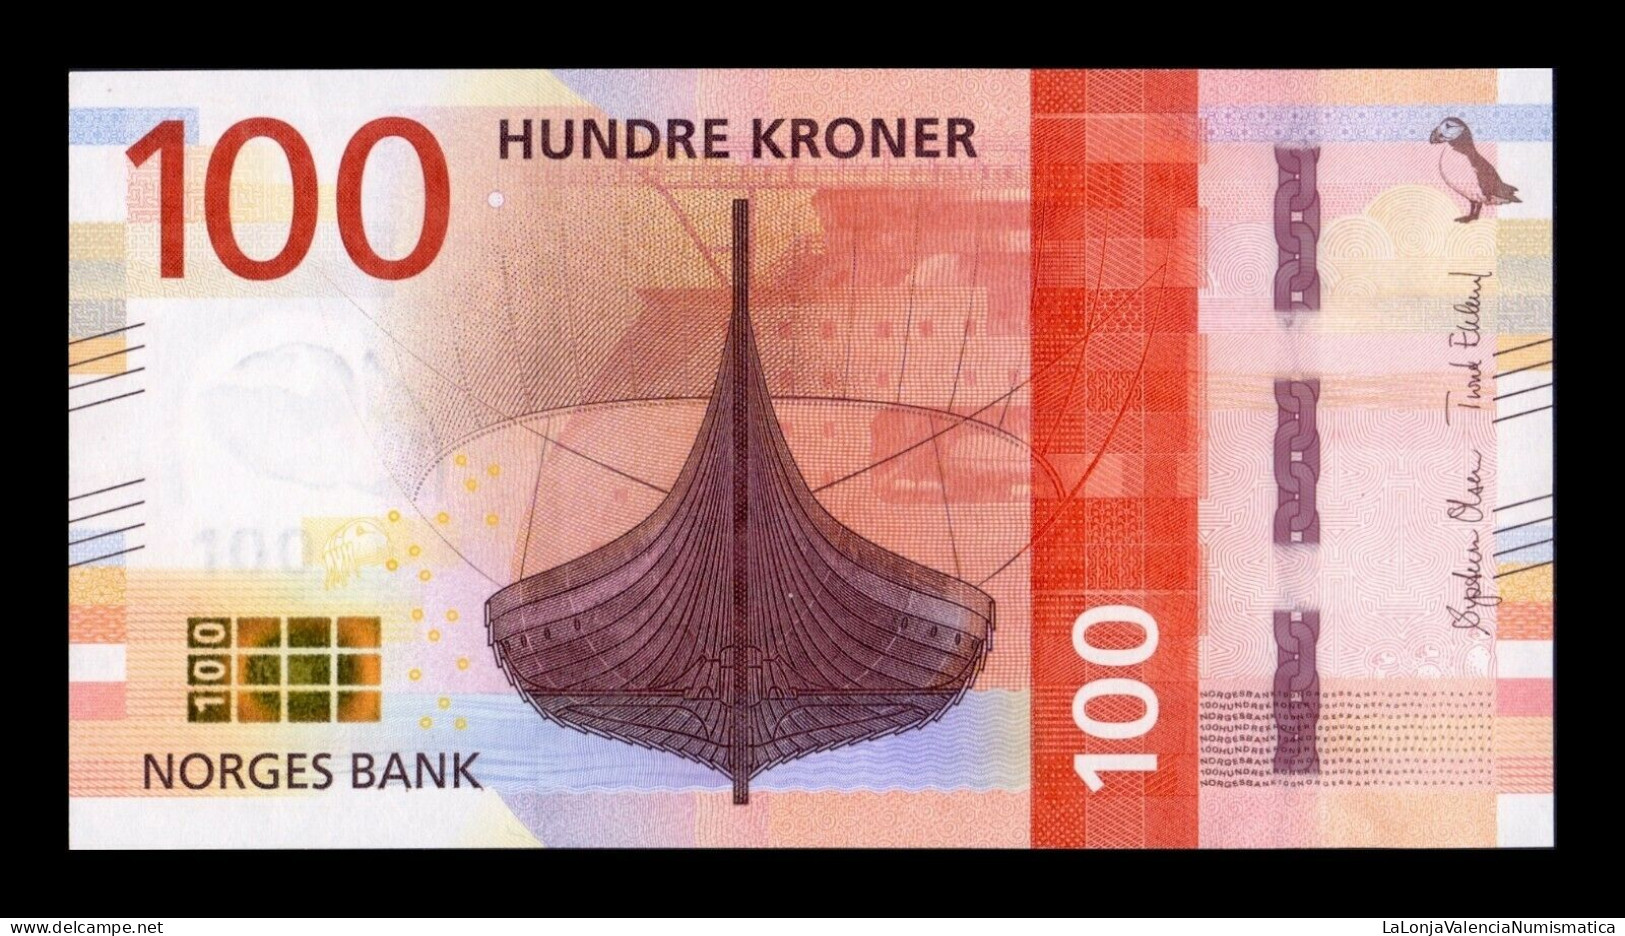 Noruega Norway 100 Kroner 2016 Pick 54 Sc Unc - Norvegia